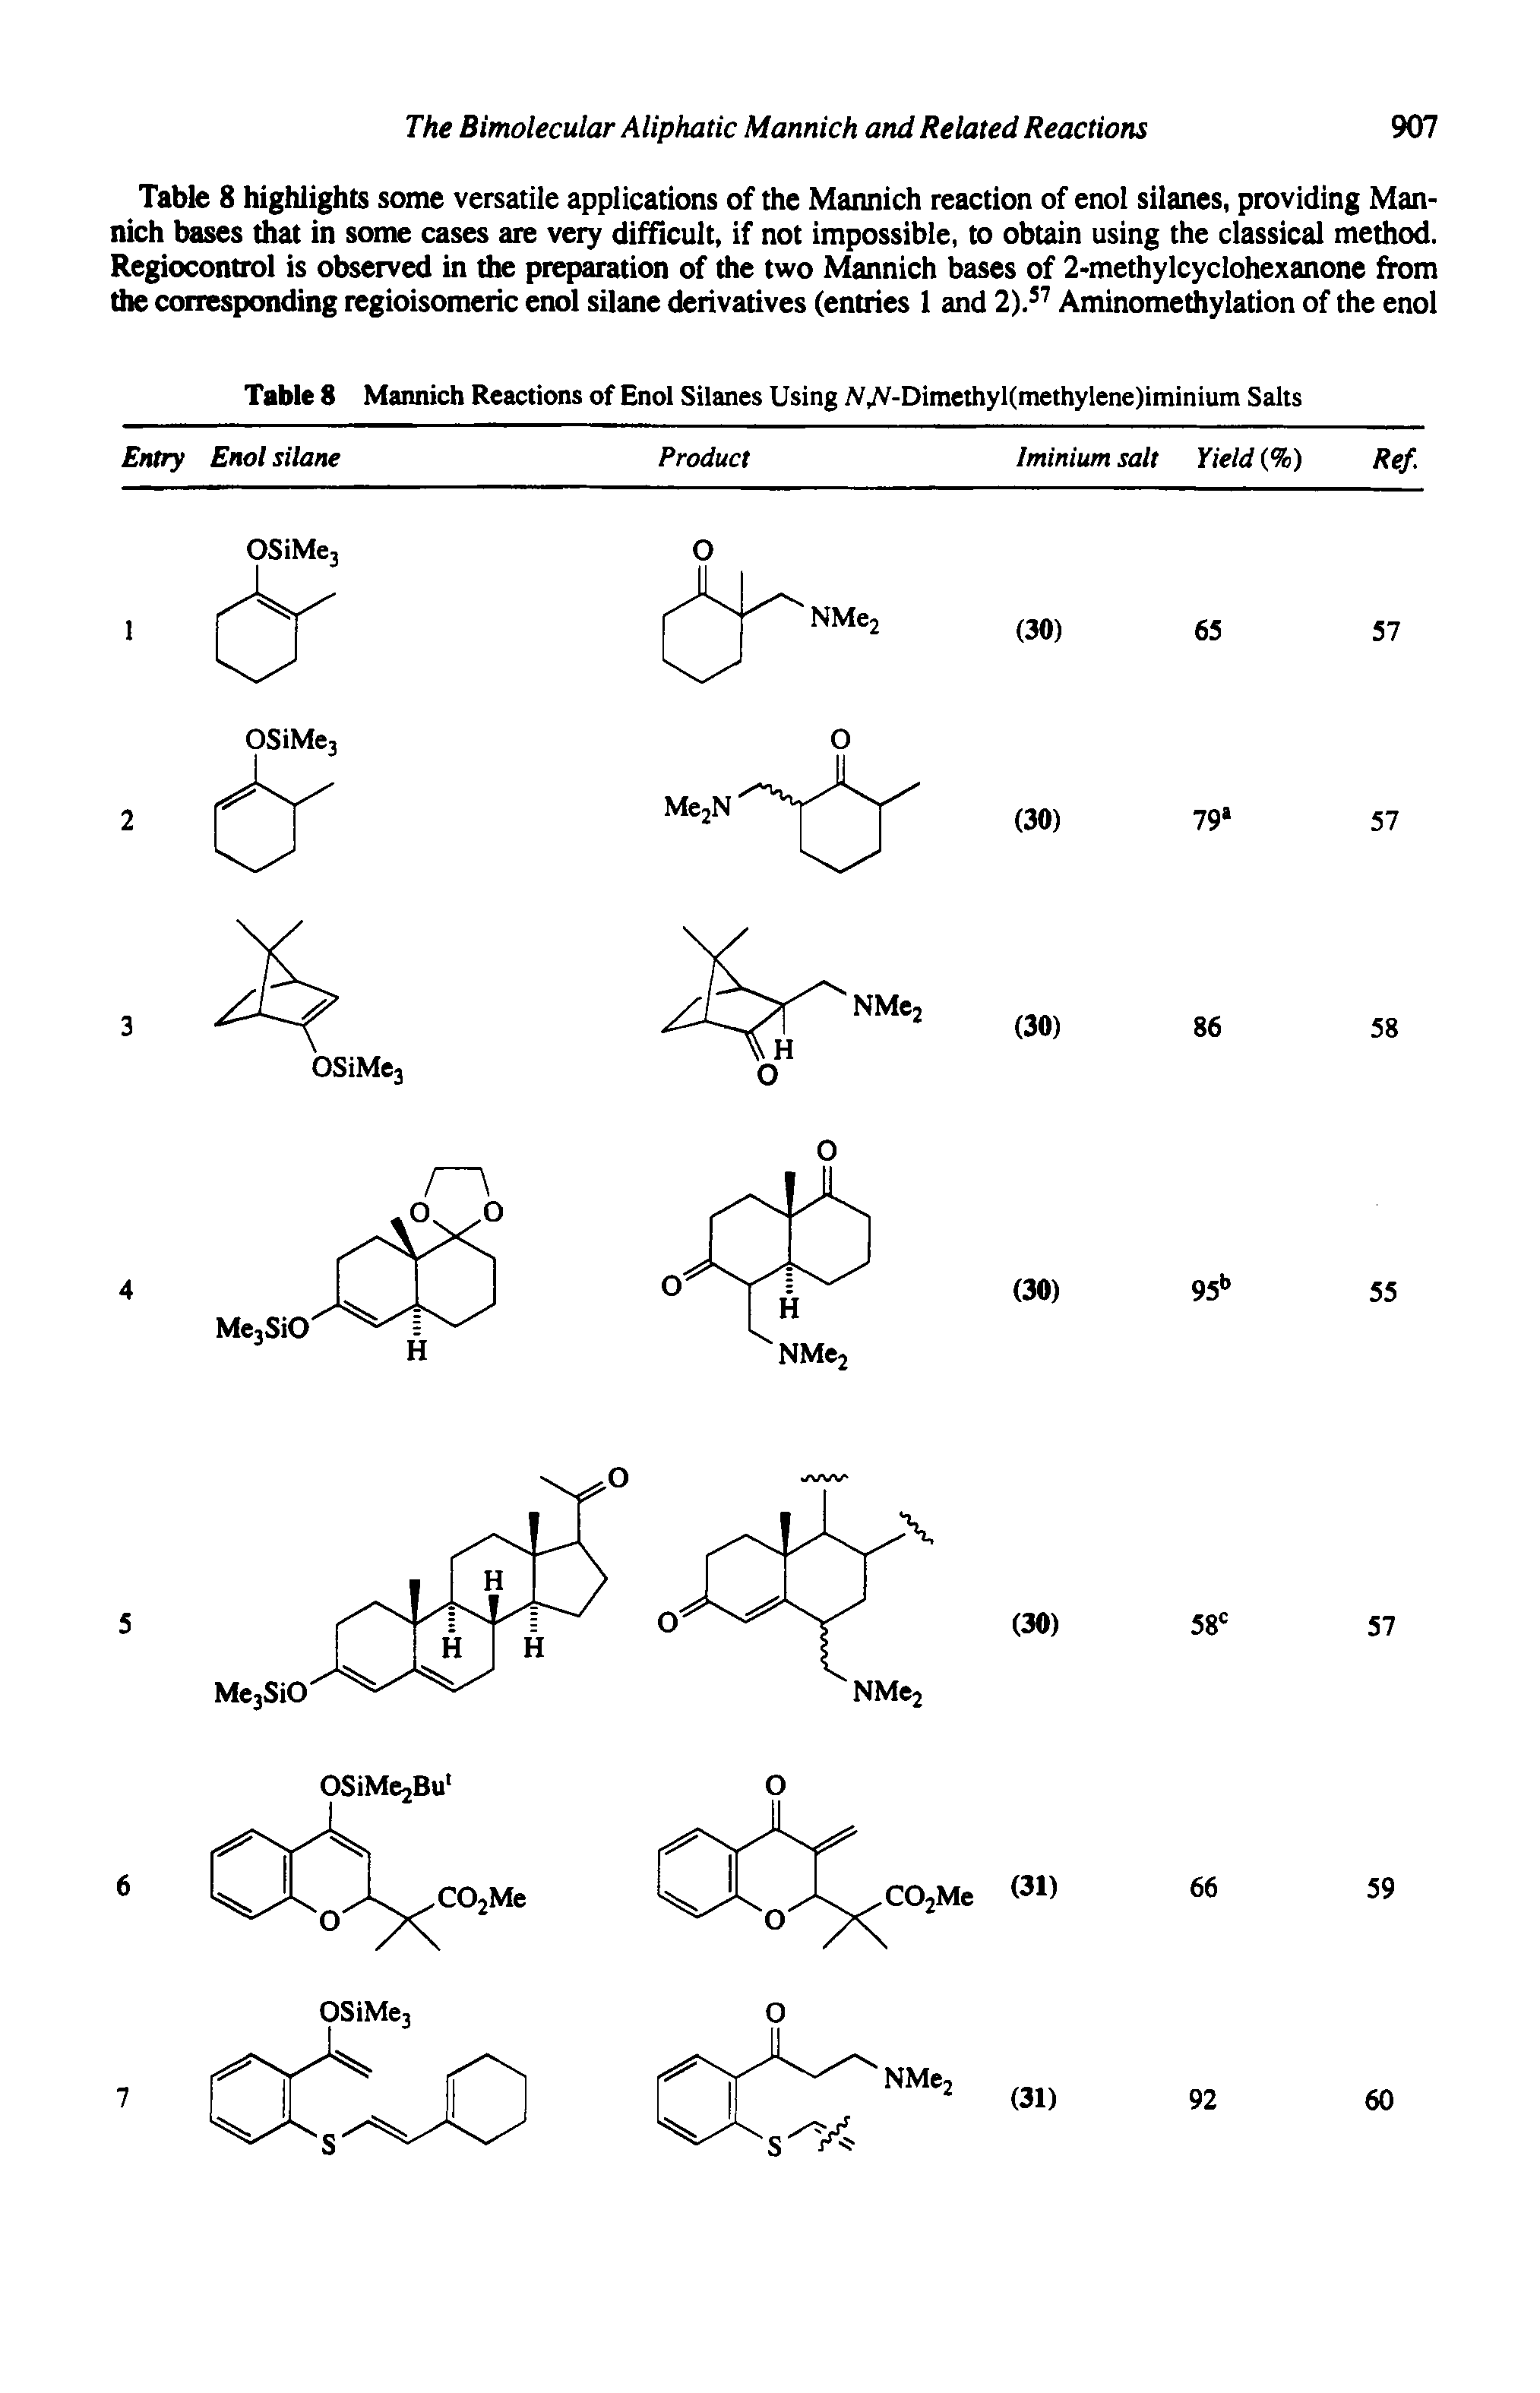 Table 8 Mannich Reactions of Enol Silanes Using jV-Dimethyl(methylene)iminium Salts...